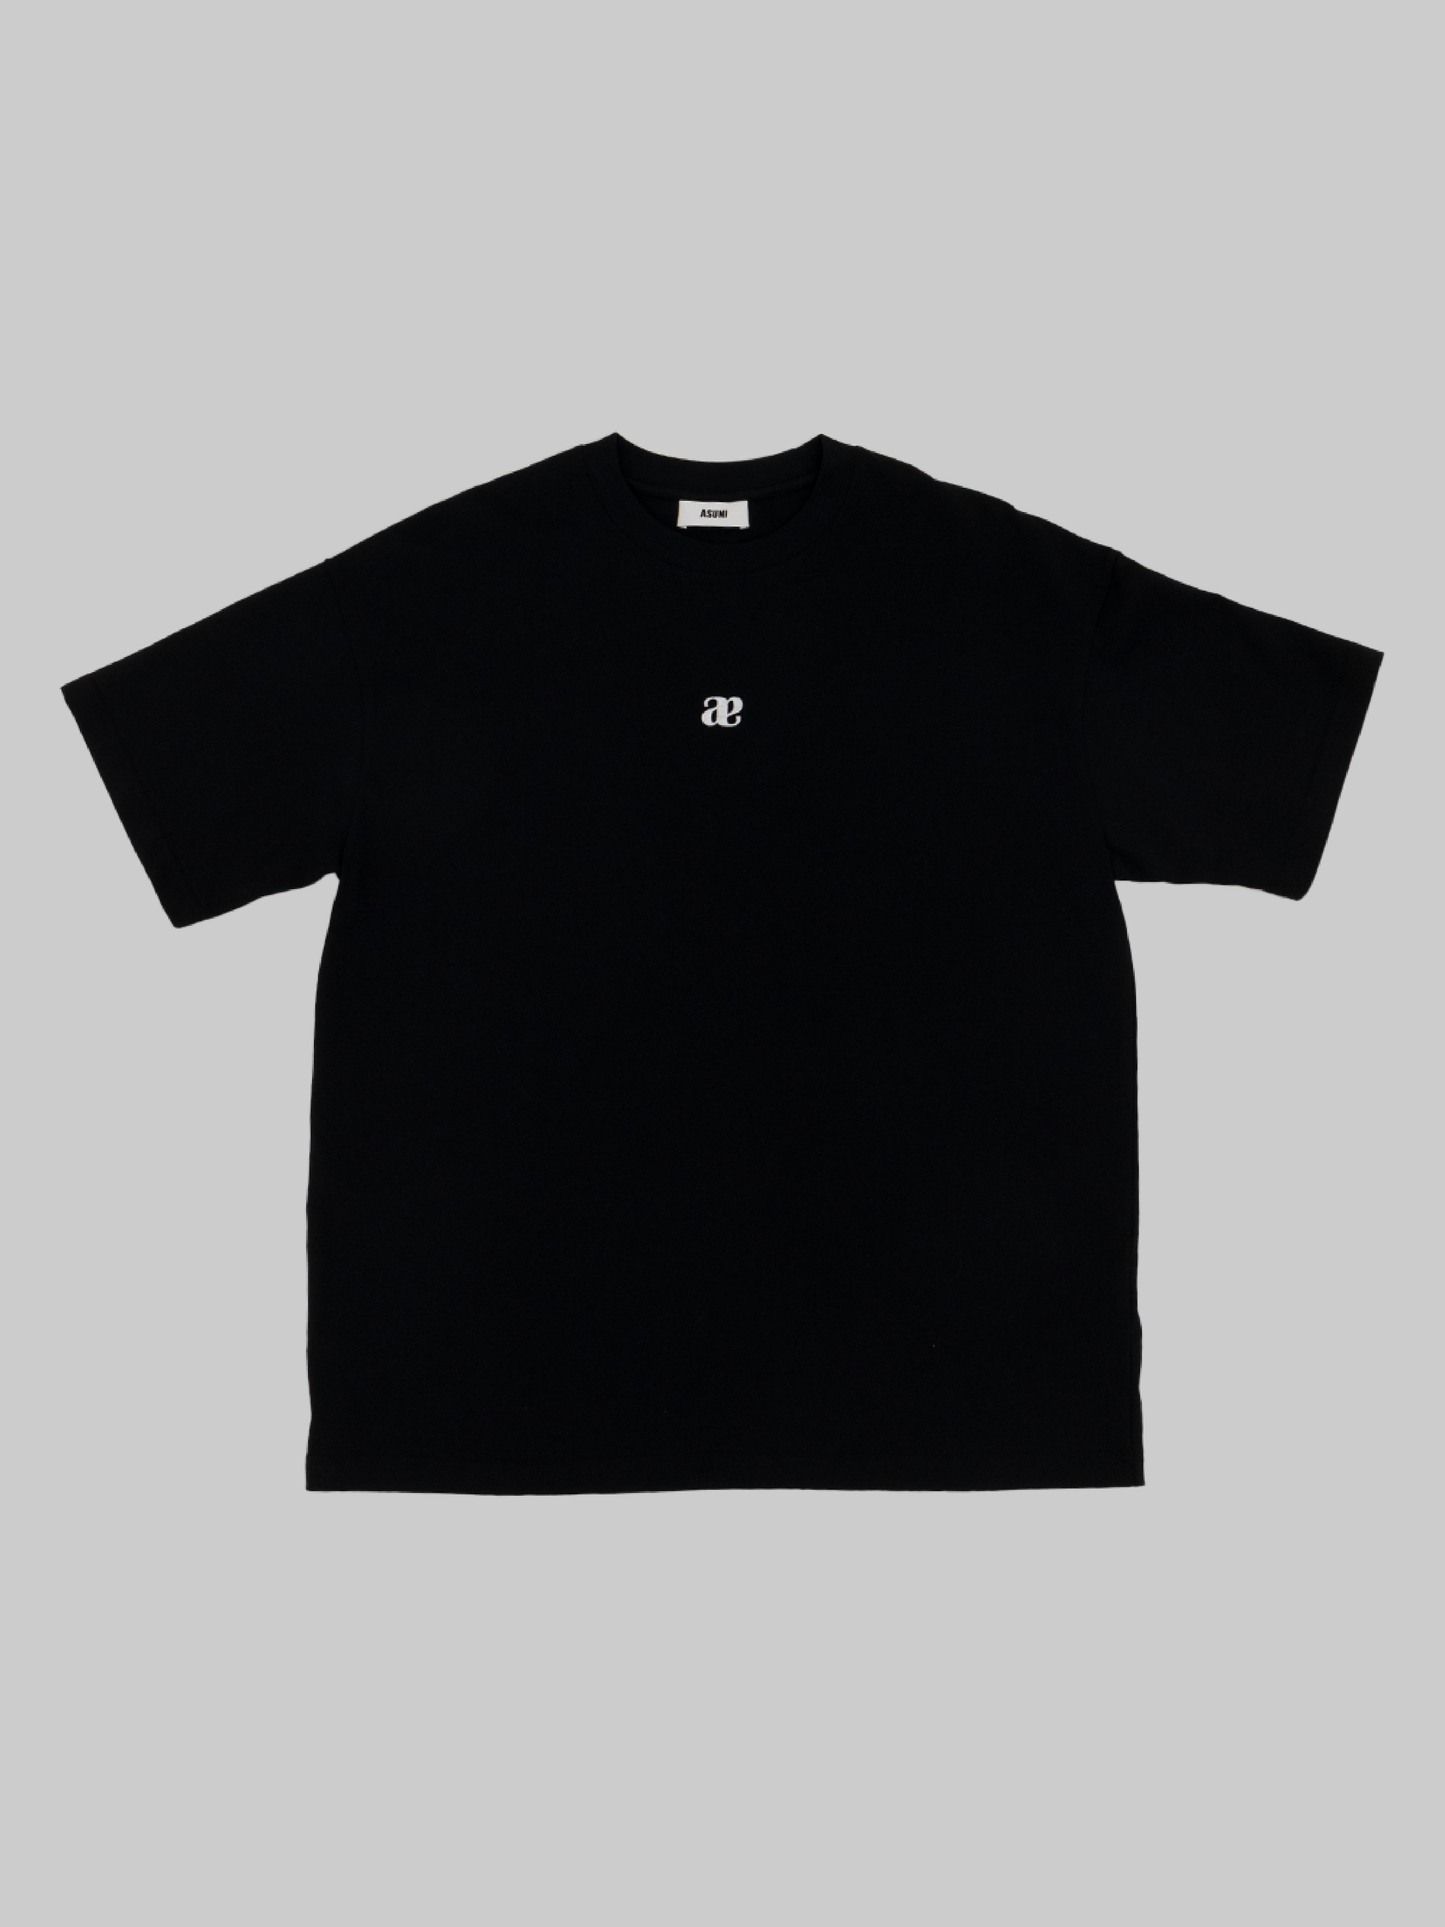 Anagram Embroidered Men’s Cotton T-shirt (Black)